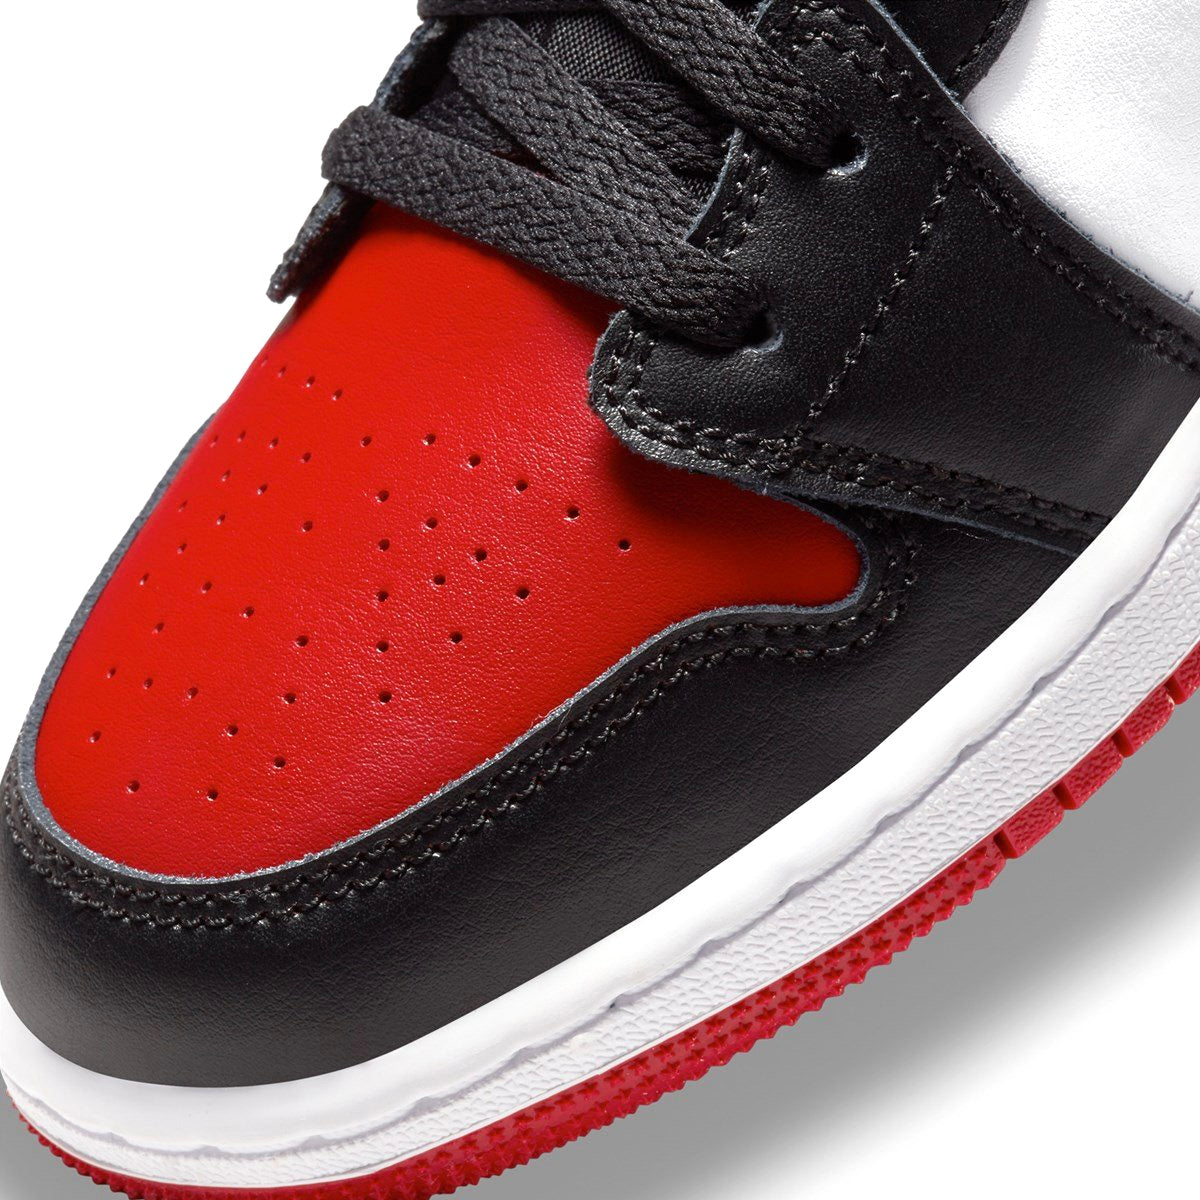 Air Jordan 1 Low GS Bred Toe Gym Red White Black